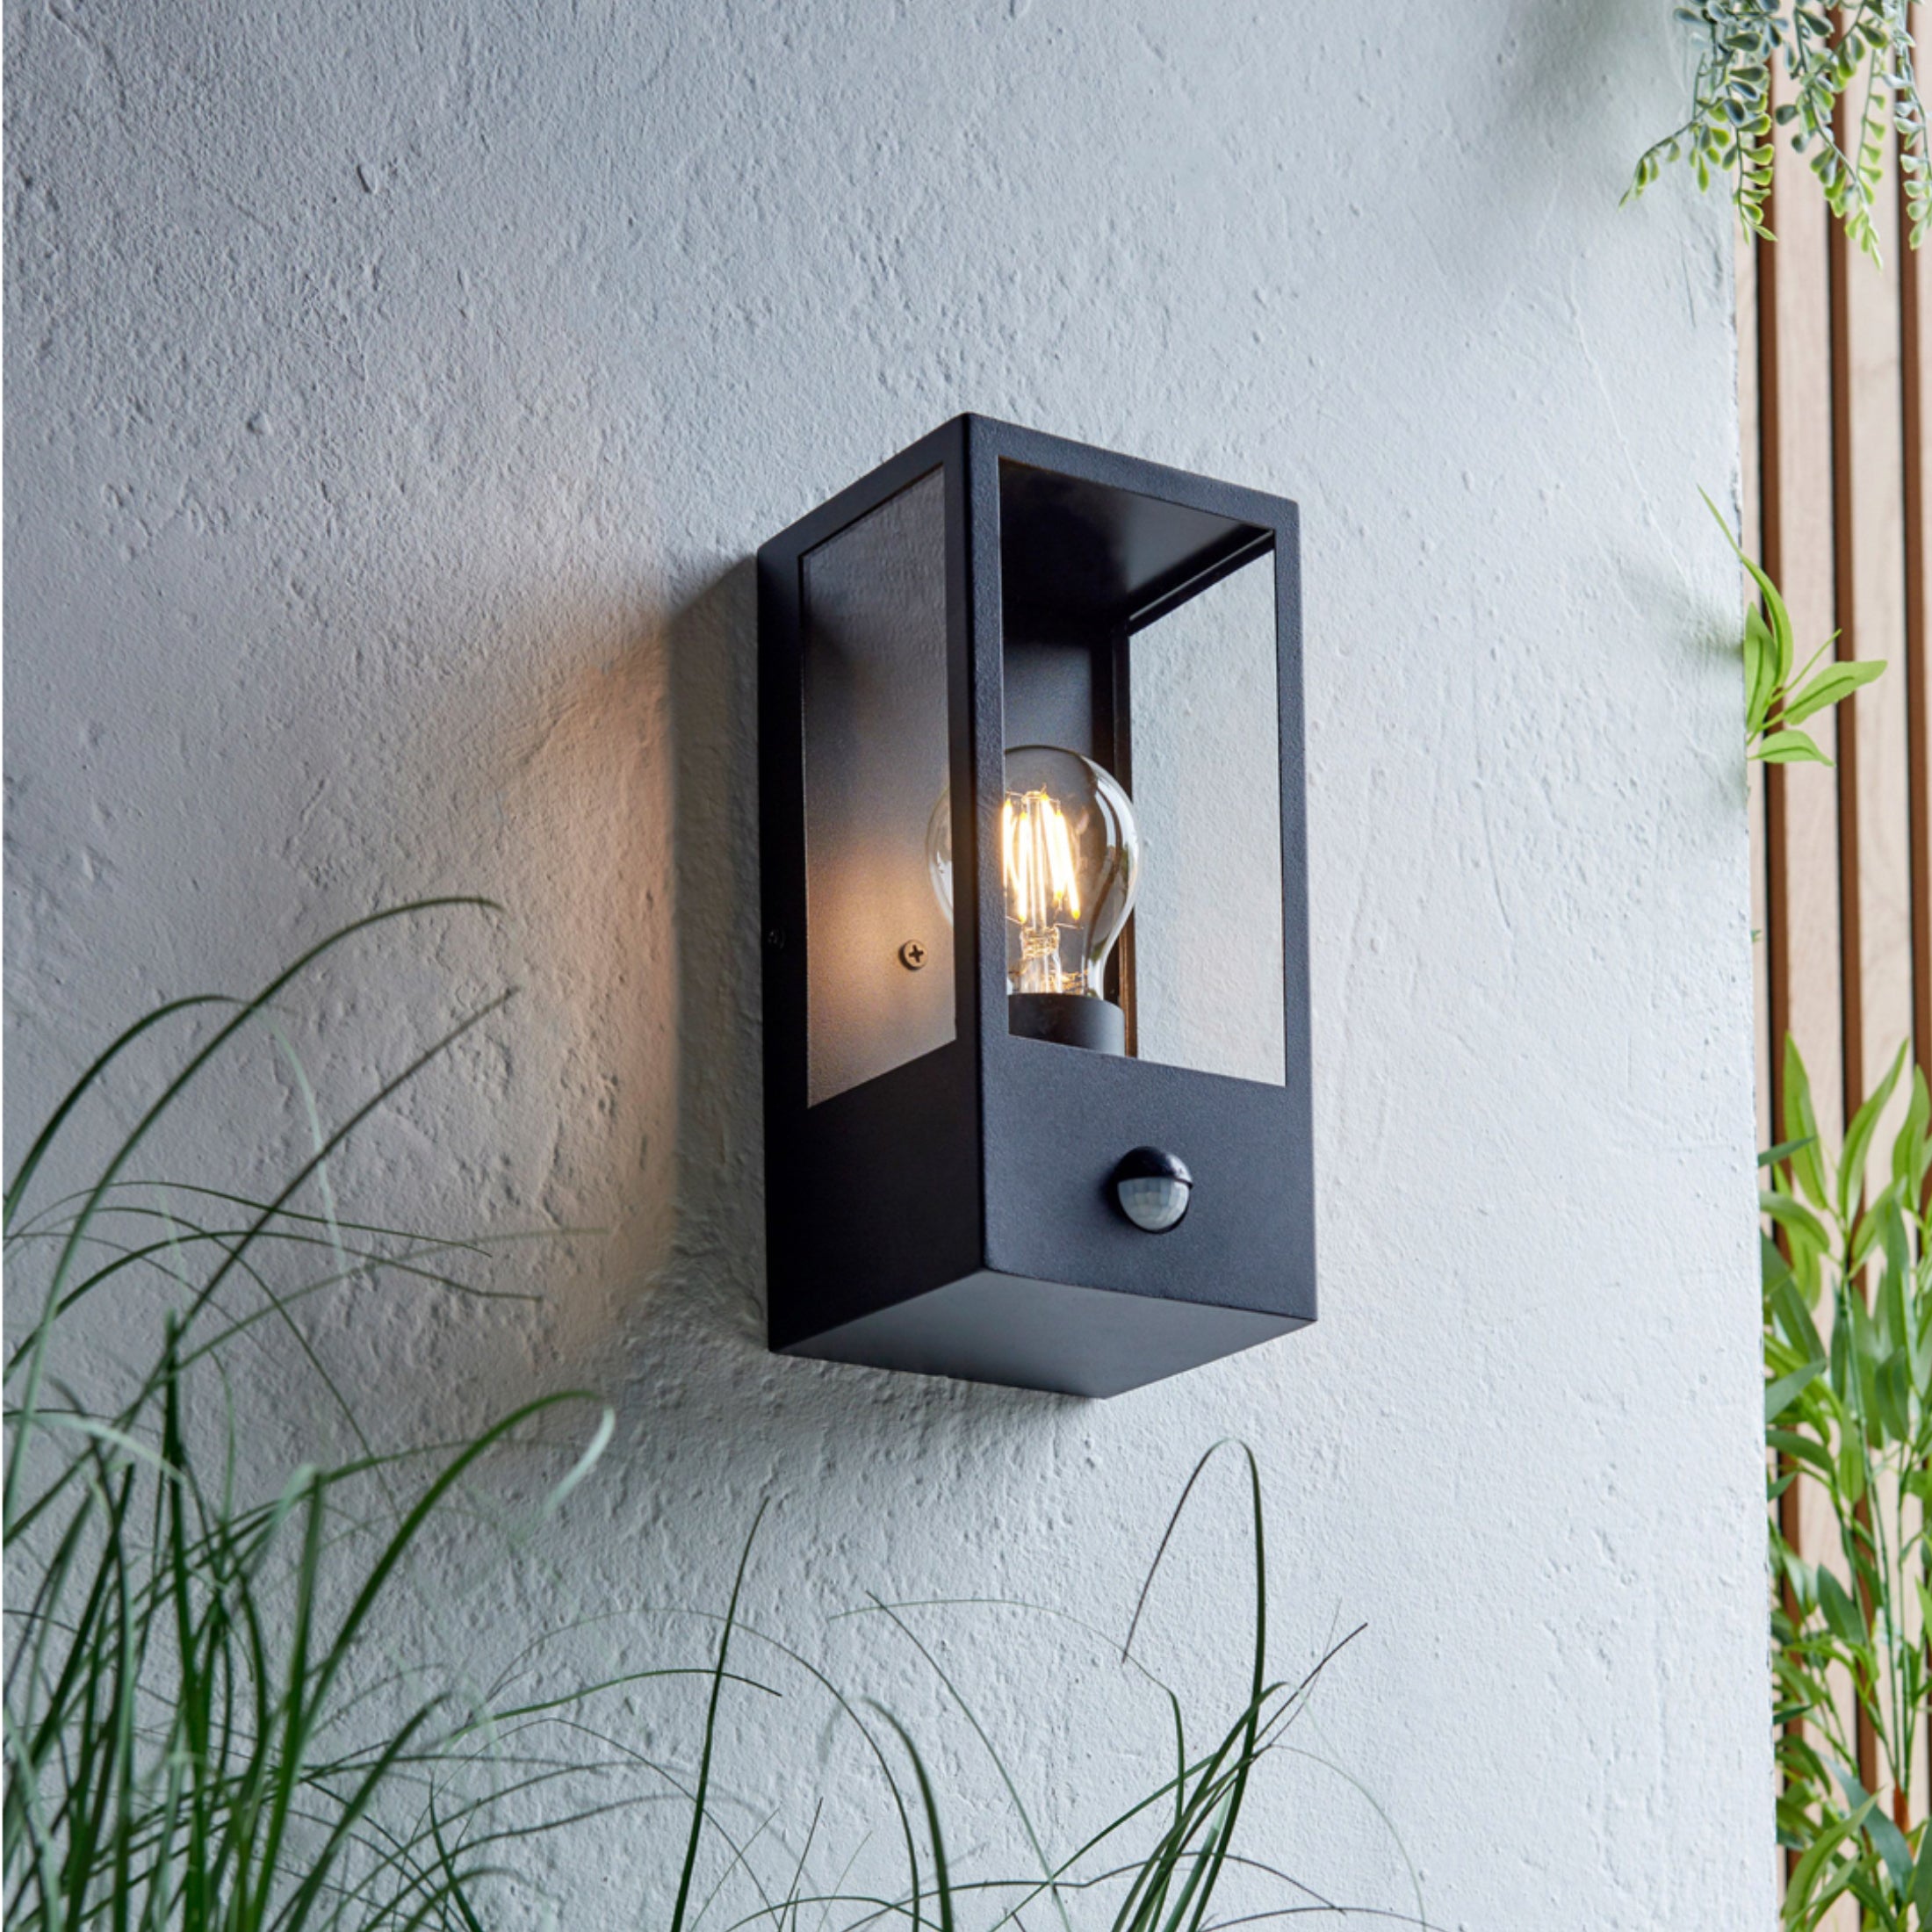 Outdoor Matt Black Box Lantern Wall Light with PIR Sensor 3